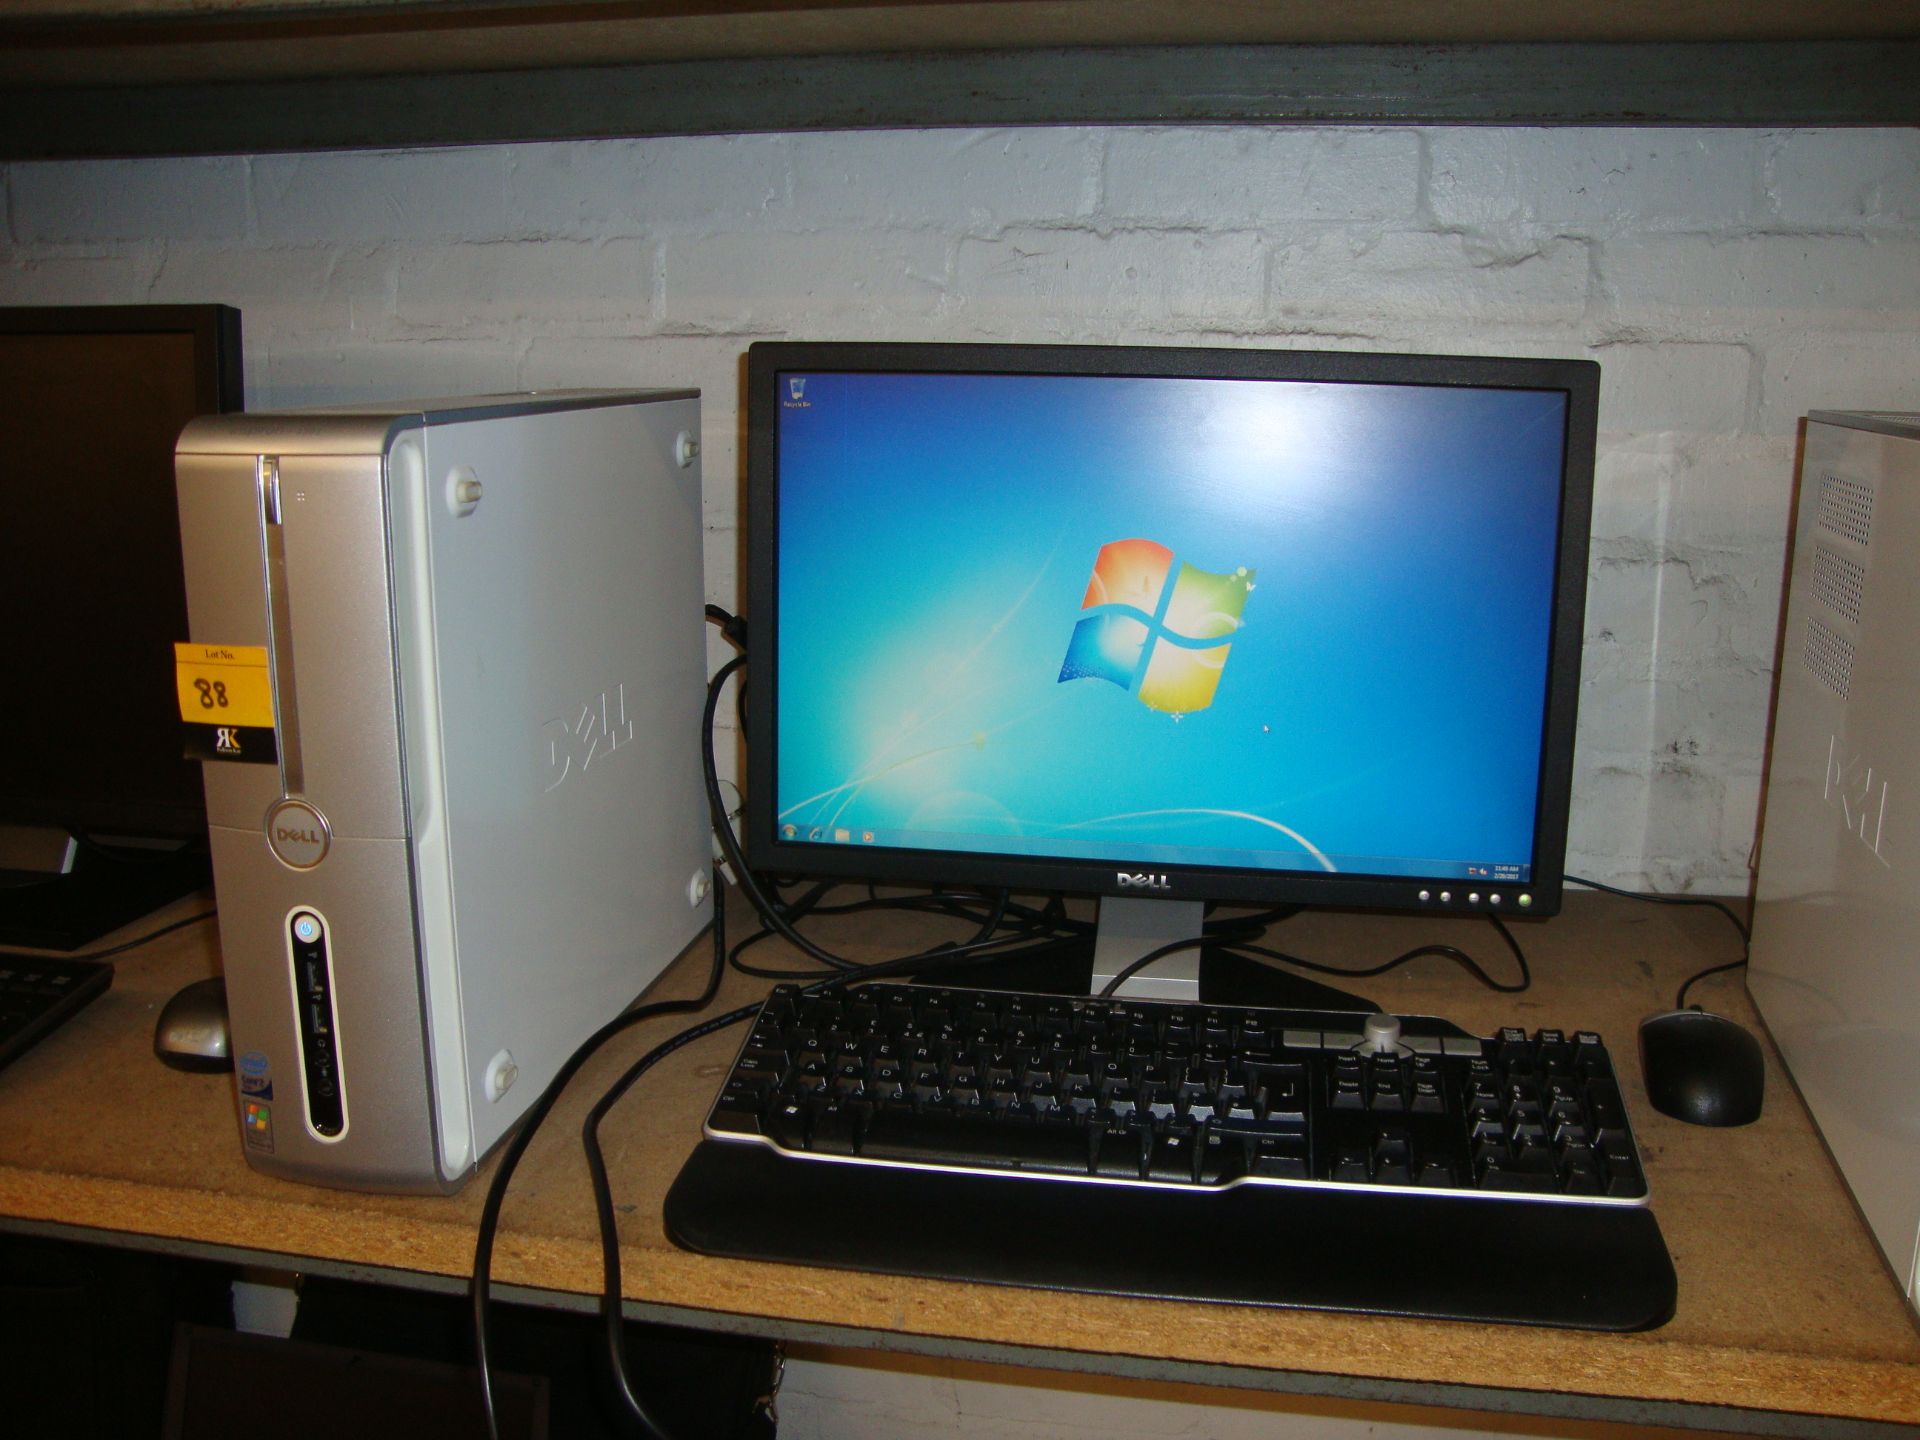 Dell Inspiron 530S Intel Core 2 Duo tower desktop computer including Dell widescreen LCD monitor